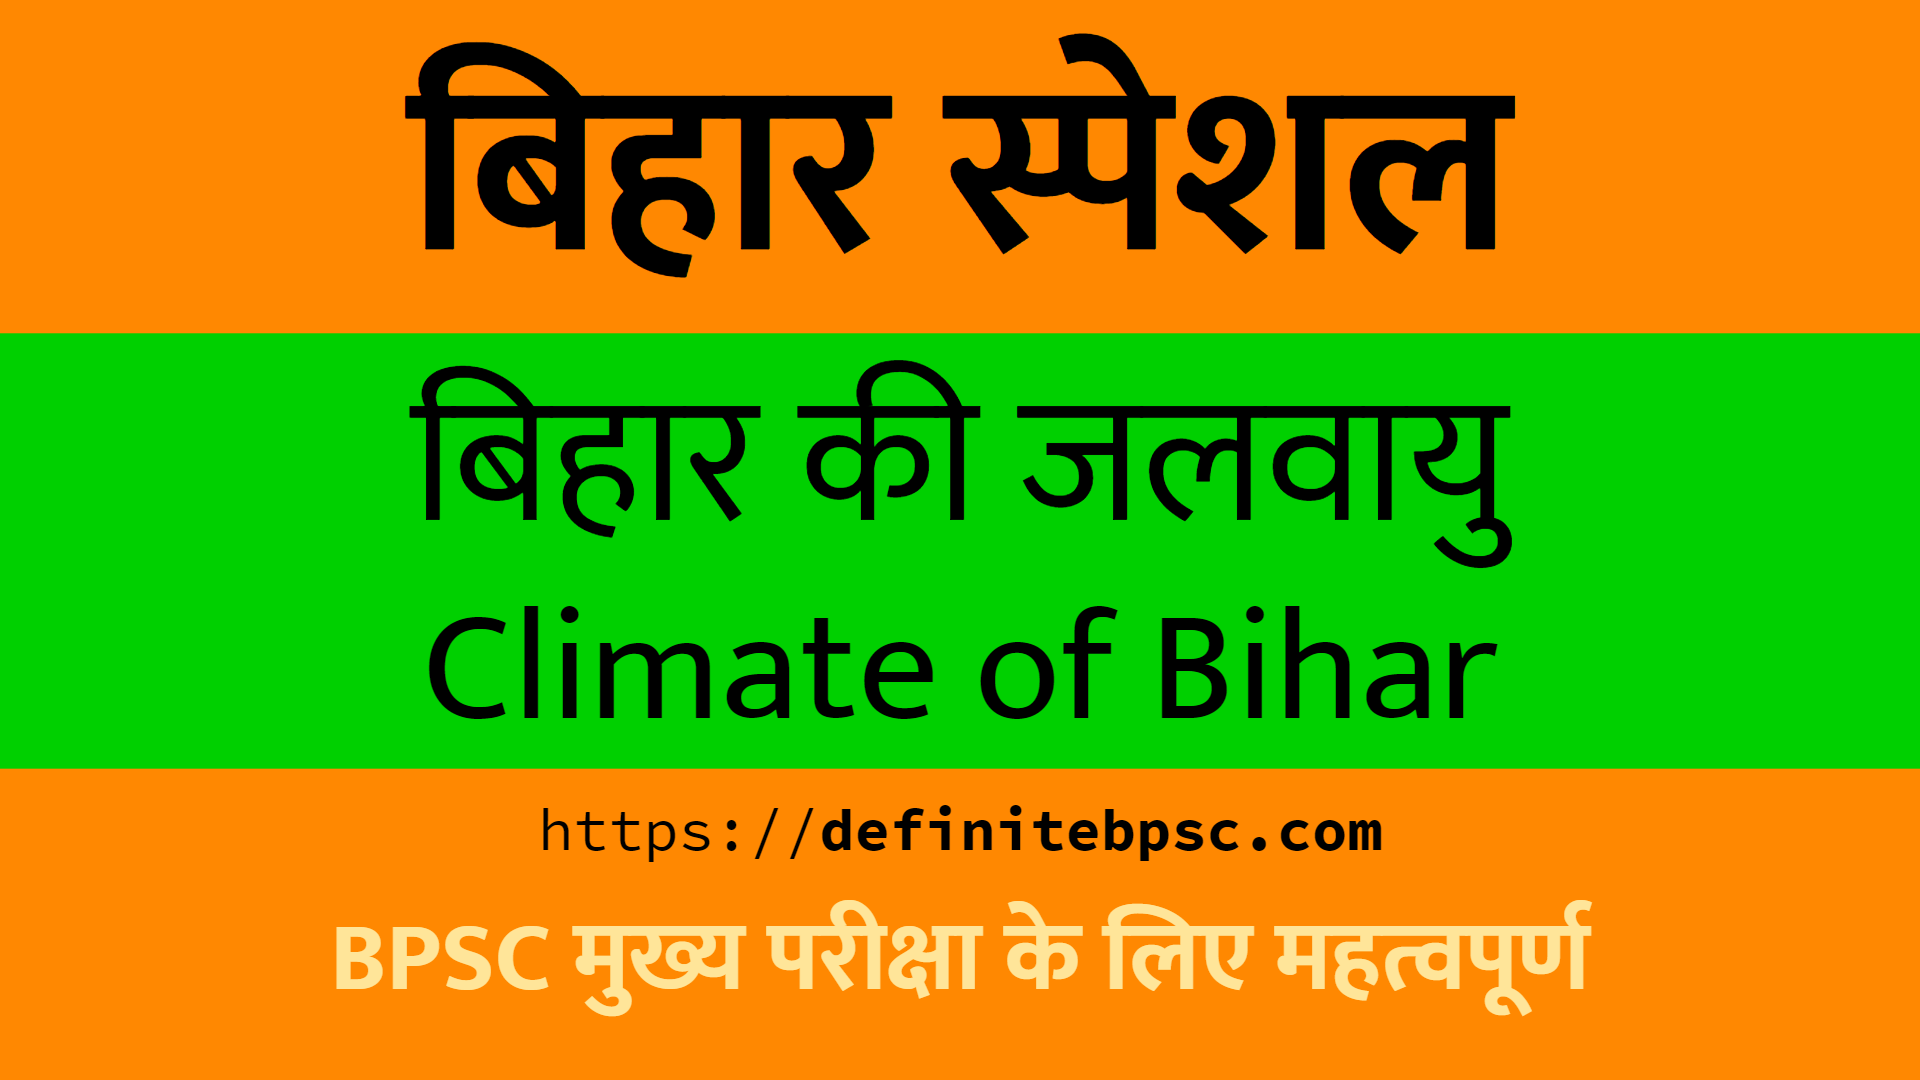 बिहार की जलवायु (Climate of Bihar)